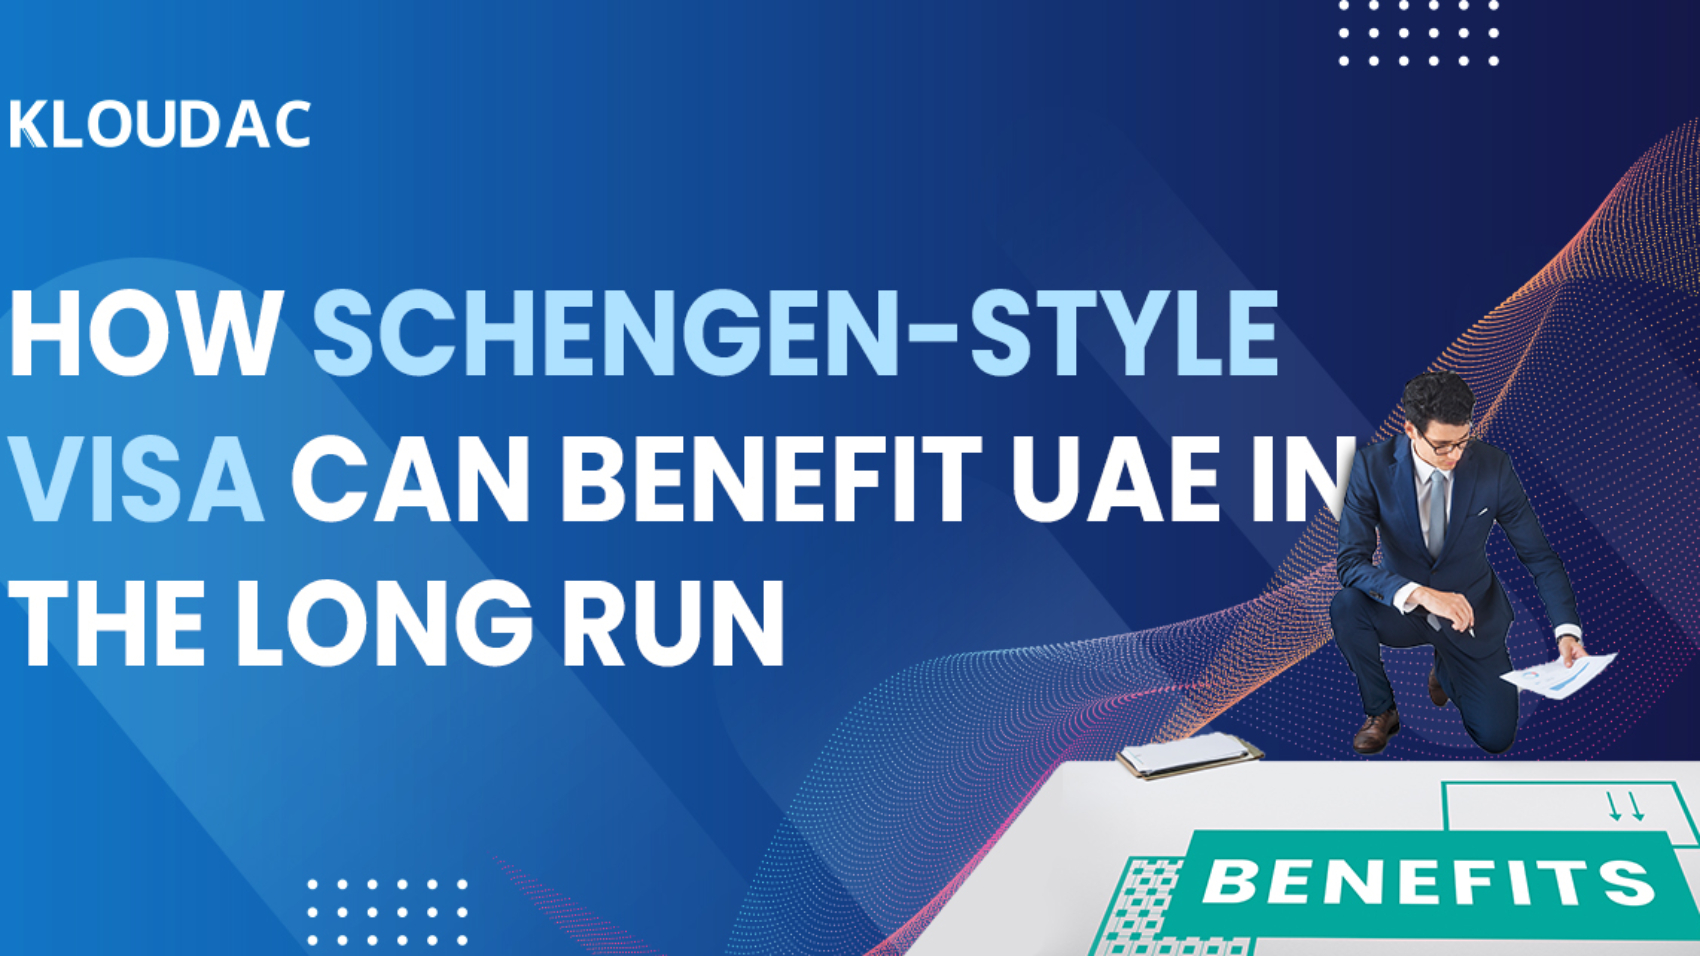 How schengen-style visa can benefit UAE in the long run